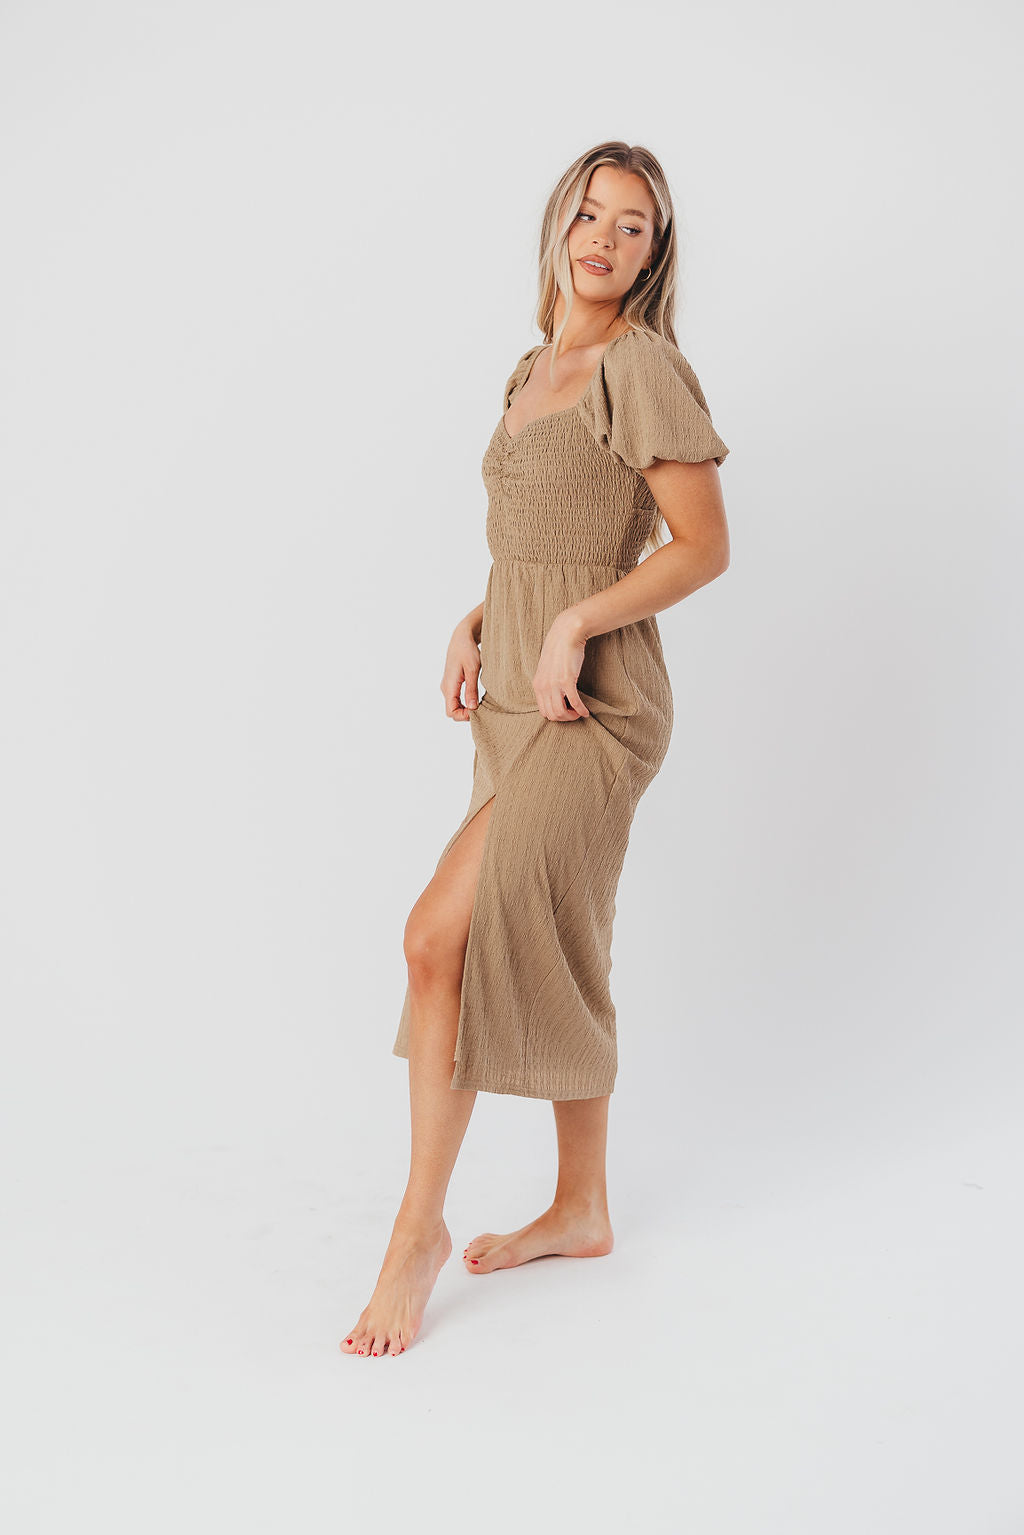 Maria Sweetheart Neckline Midi Dress in Taupe - Bump Friendly & Inclusive Sizing (S-3XL)